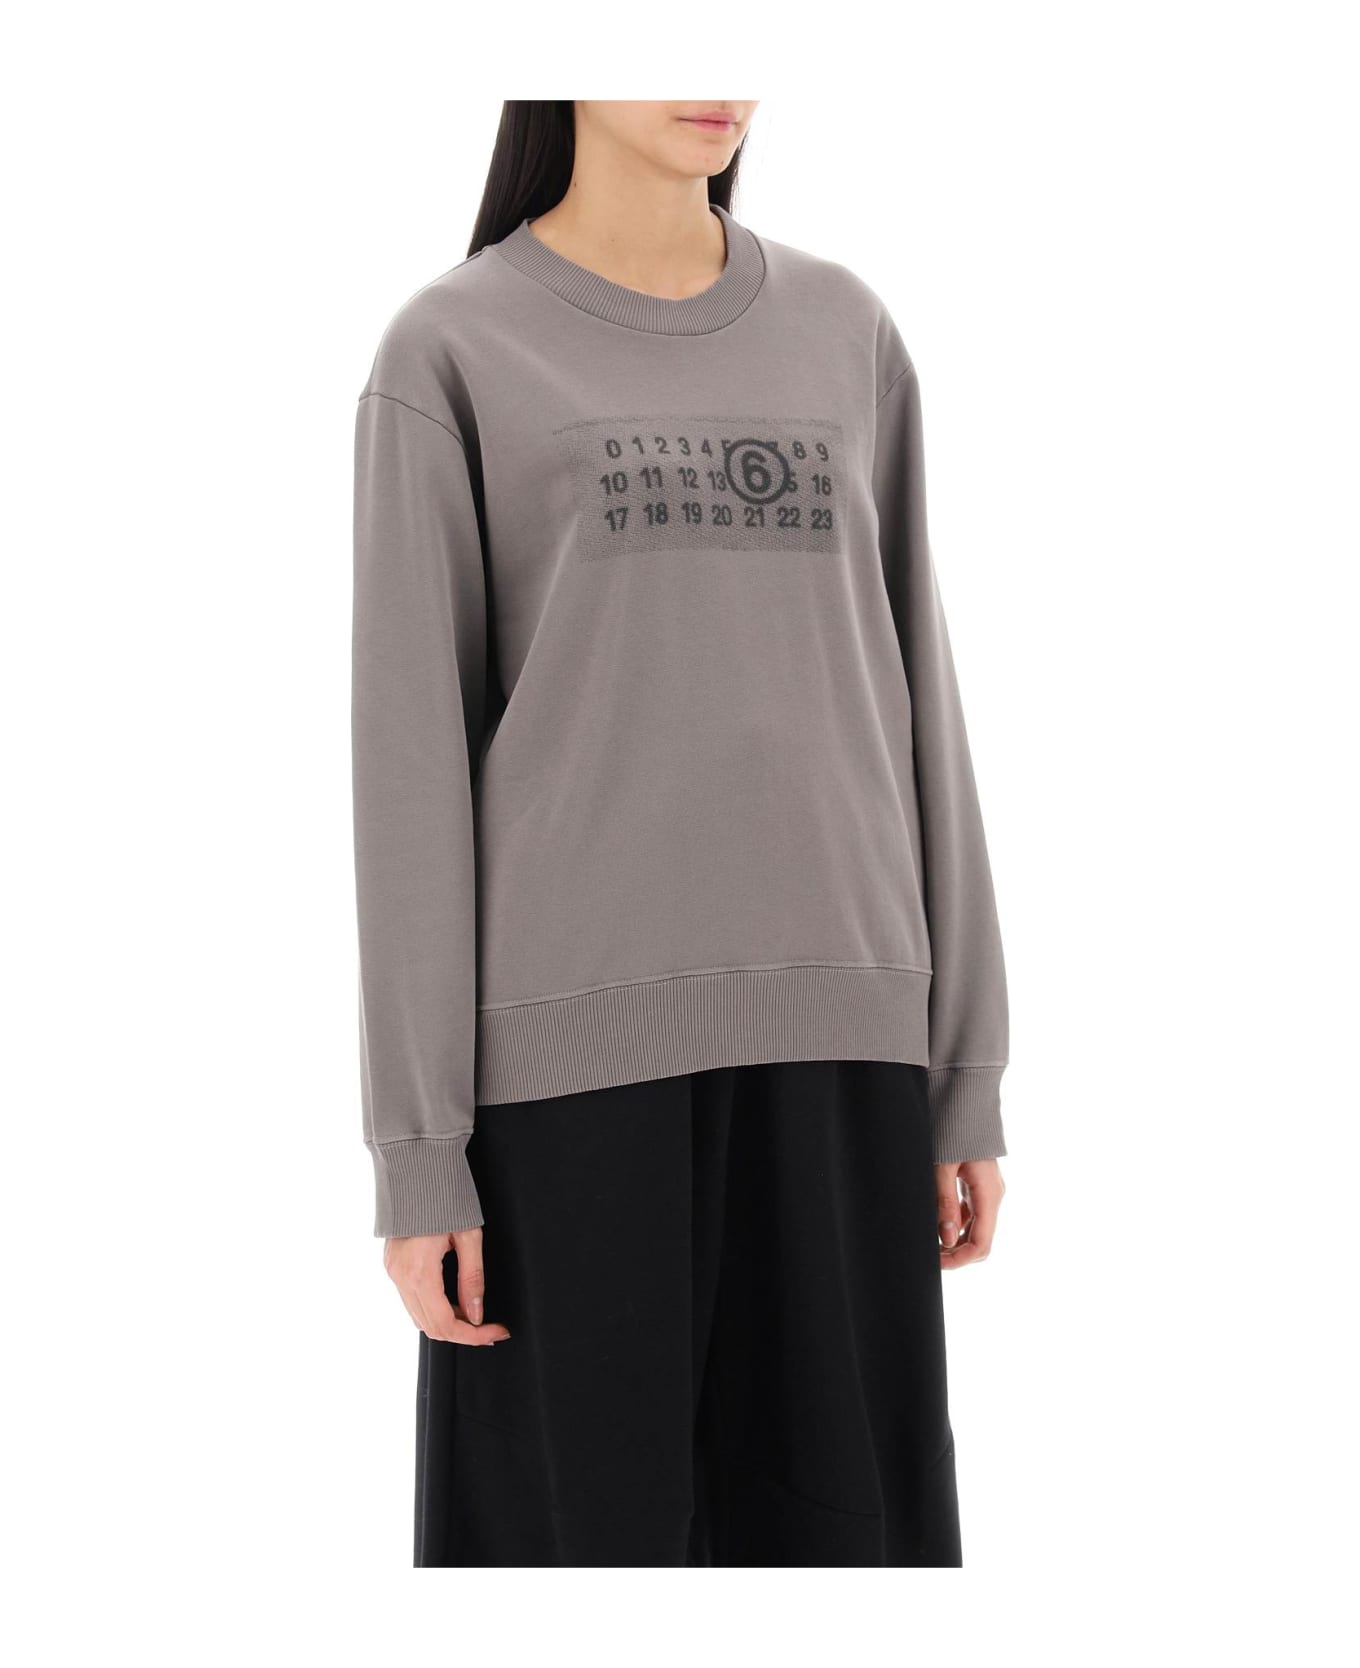 MM6 Maison Margiela Sweatshirt With Numeric Logo Print - Taupe